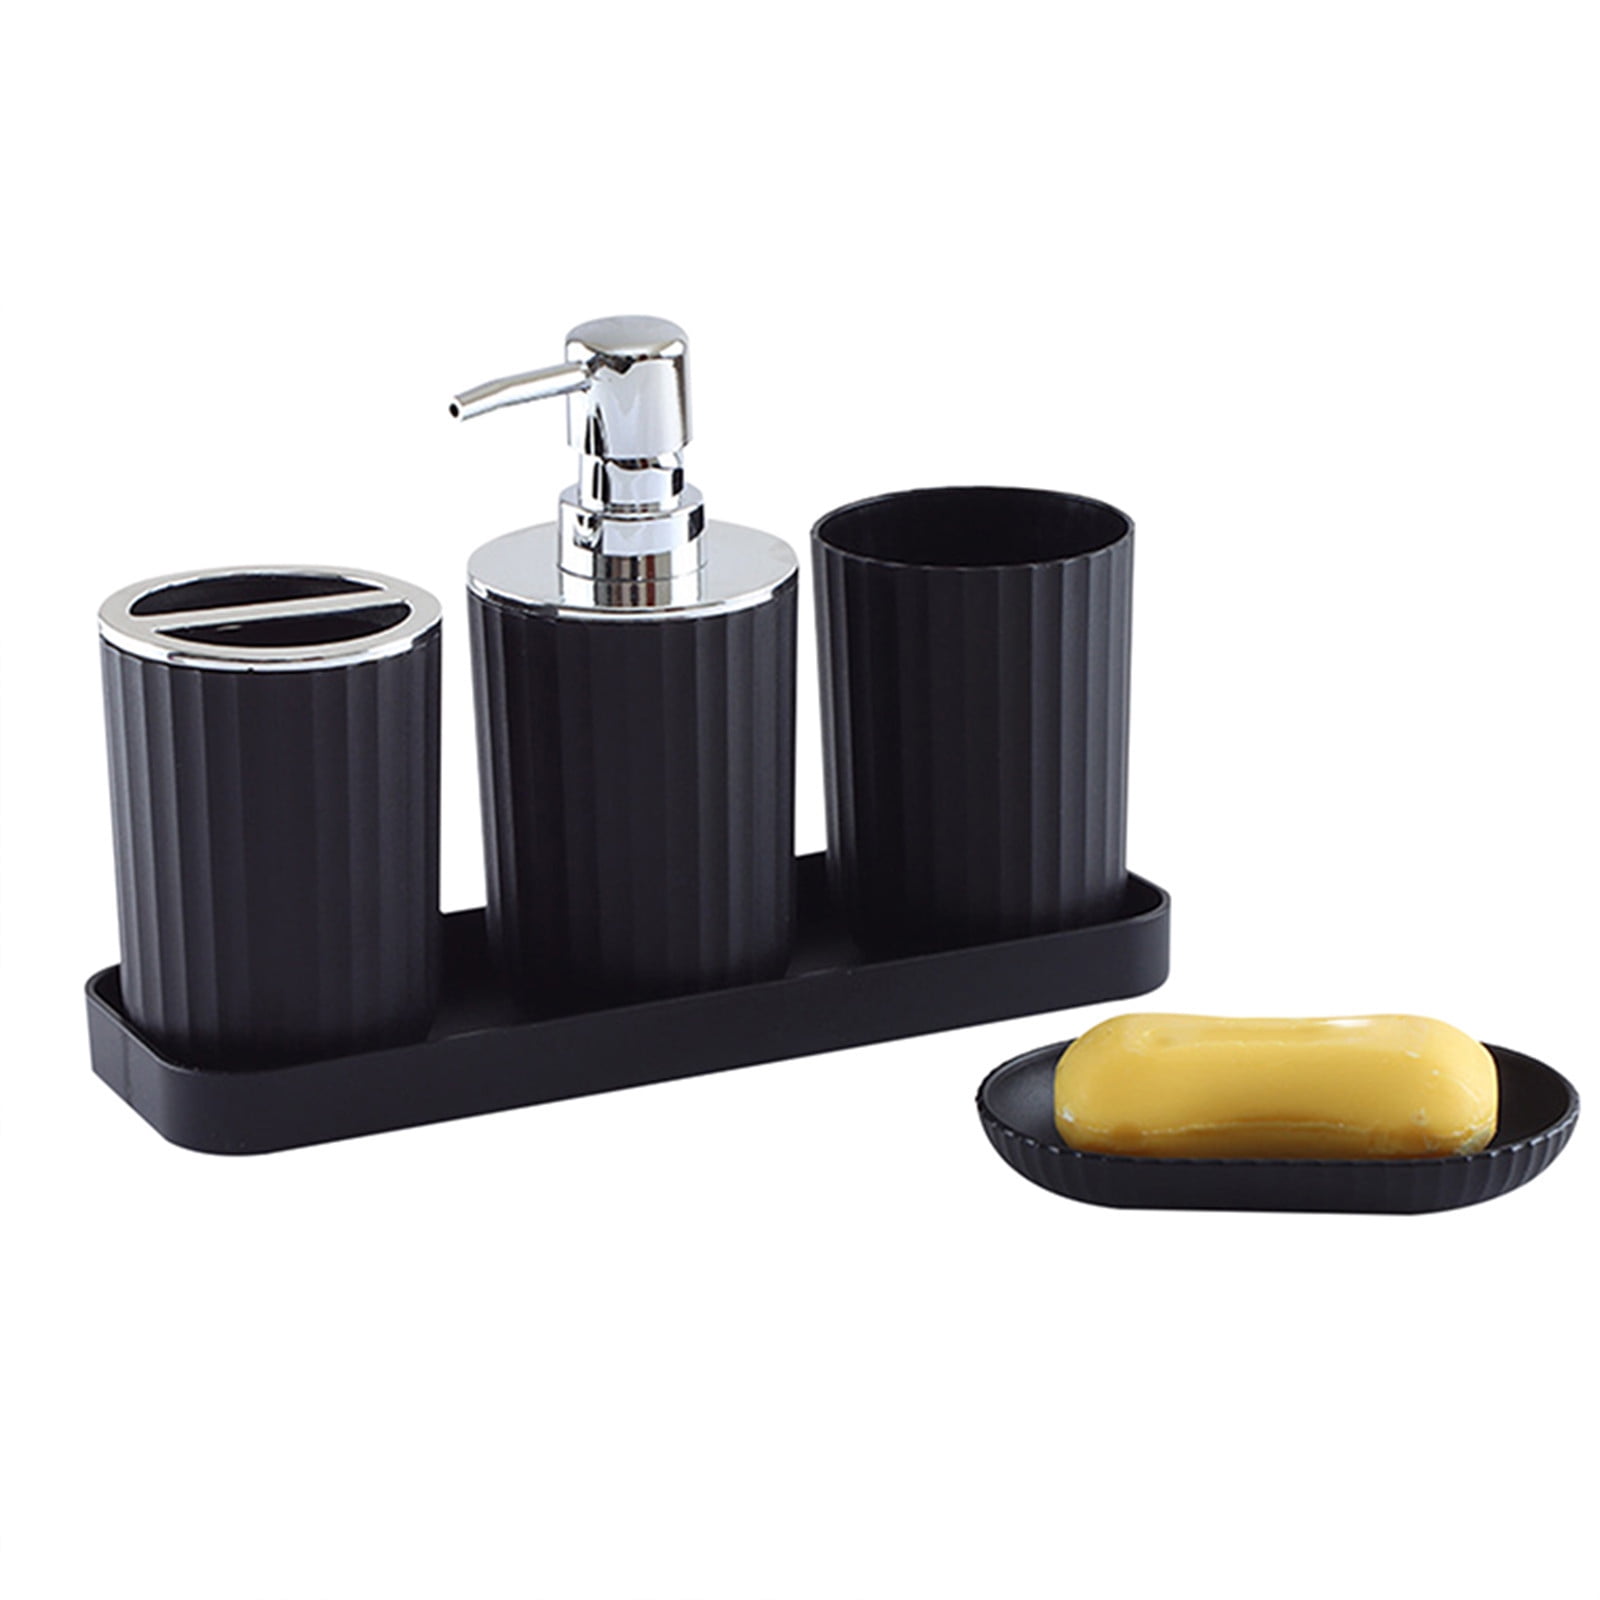 LUANT Resin Soap Dish, Soap Dispenser, Toothbrush Holder & Tumbler Bathroom Accessory 5 Piece Set (Black)